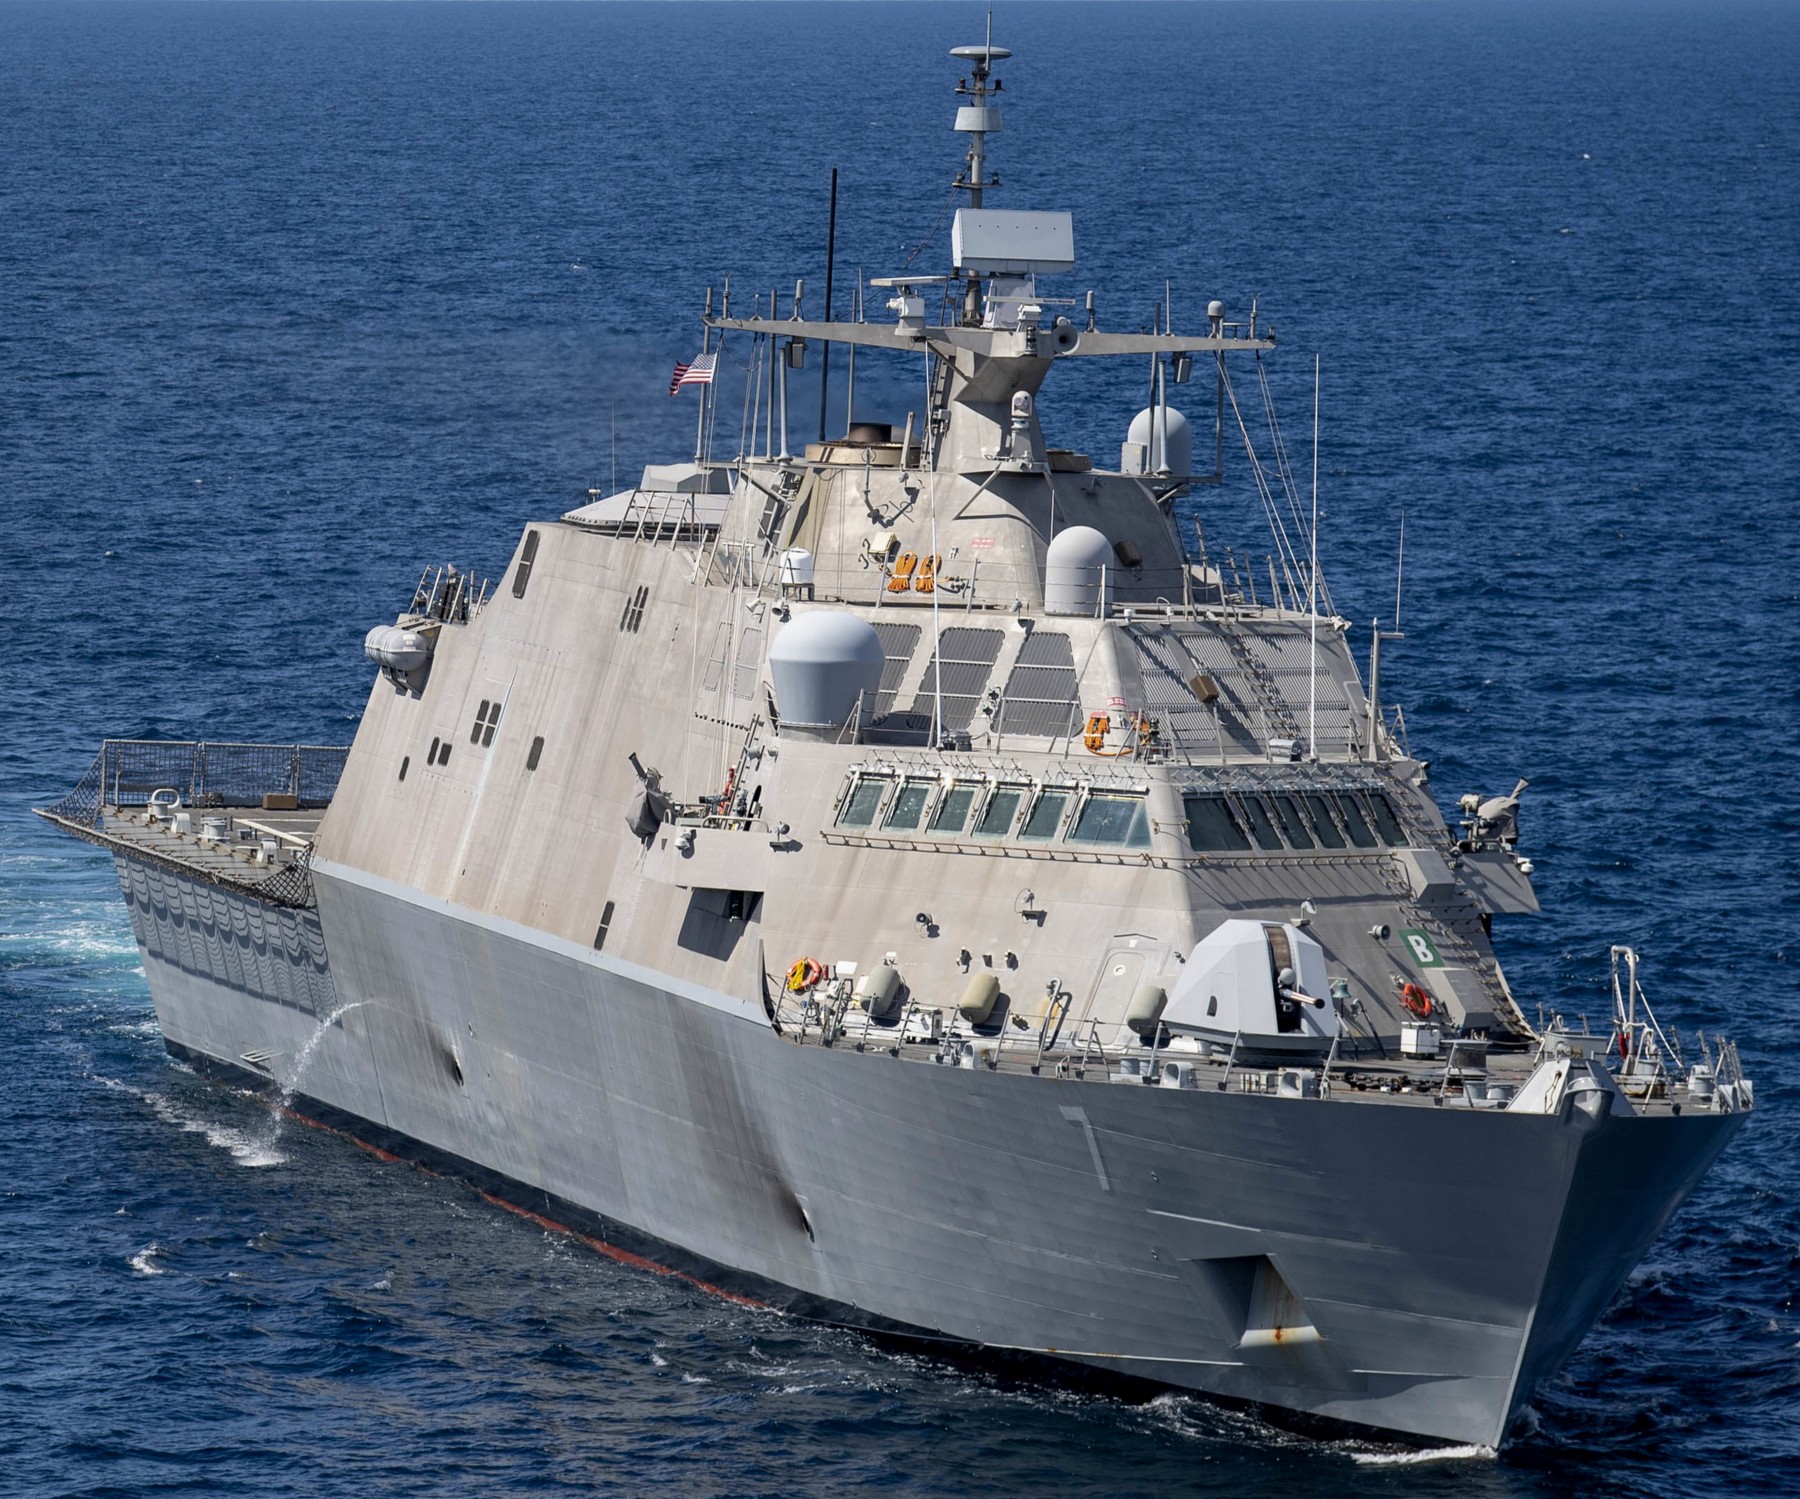 lcs-7 uss detroit freedom class littoral combat ship us navy 30 atlantic ocean